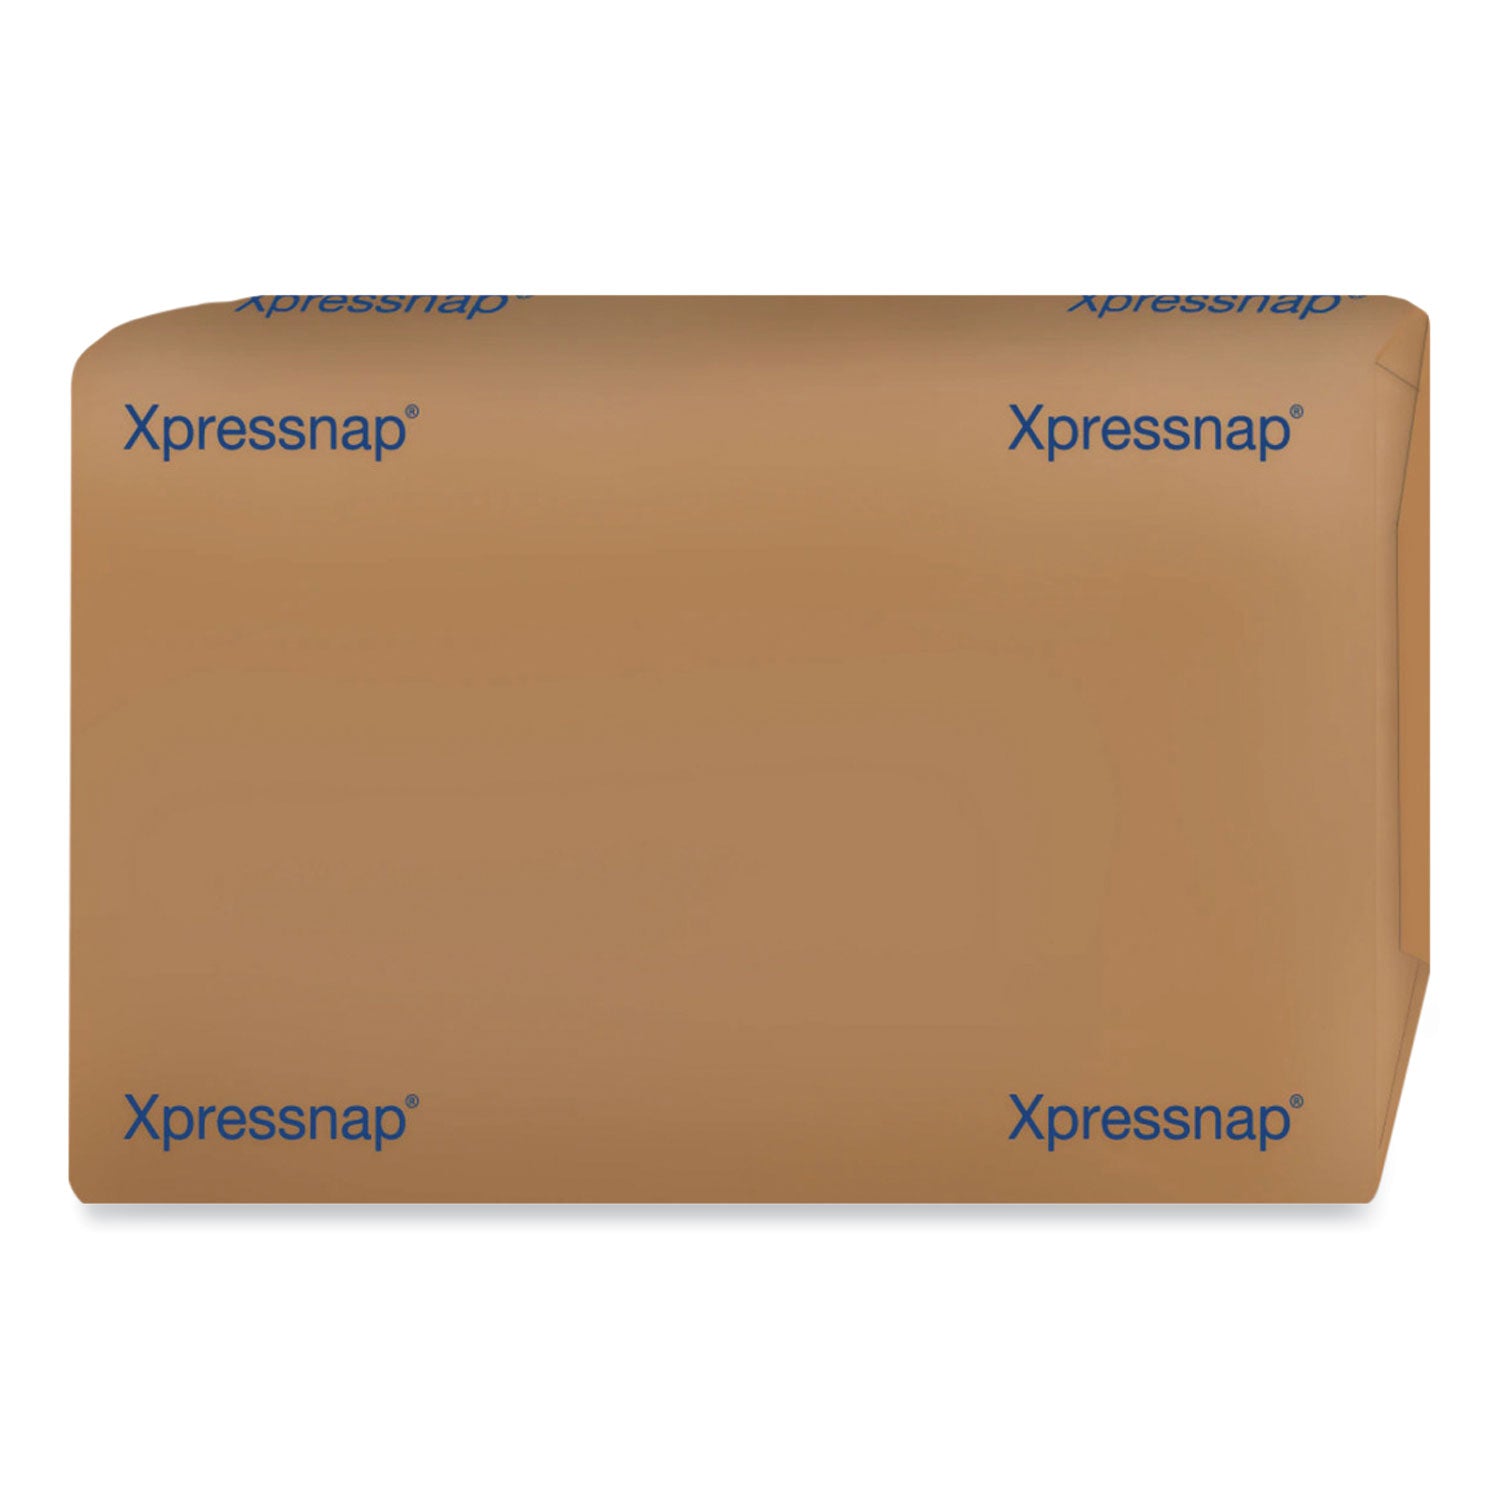 xpressnap-interfold-dispenser-napkins-2-ply-bag-pack-13-x-85-natural-500-pack-12-packs-carton_trkdx906e - 1